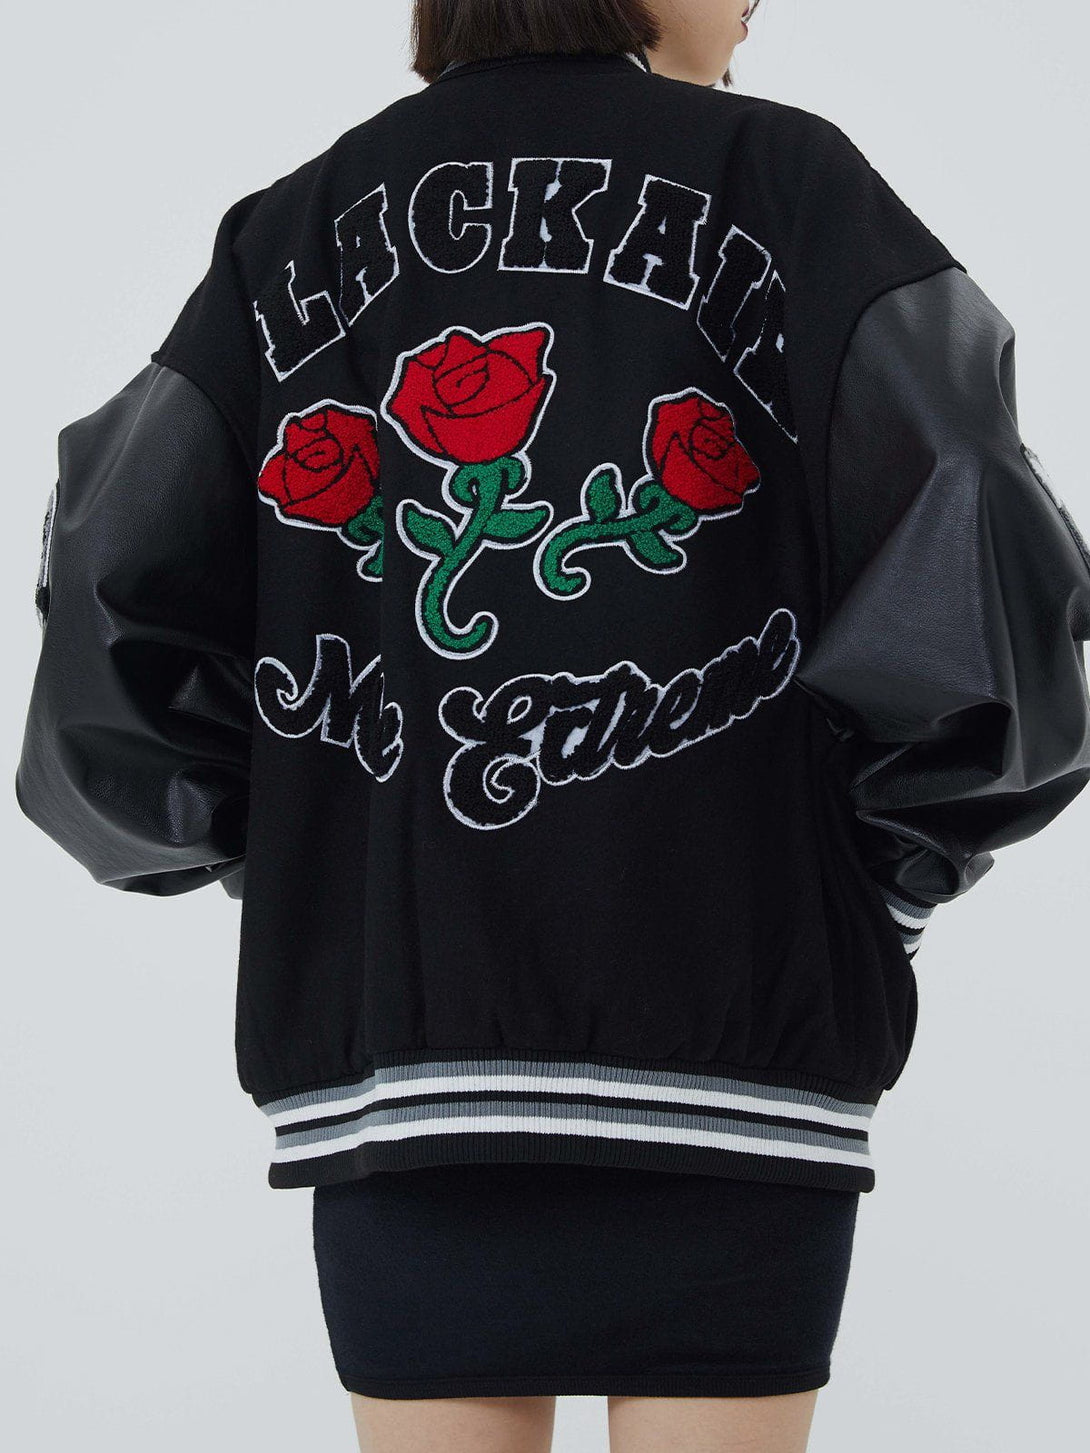 Majesda® - Flocking Rose PU Jacket outfit ideas, streetwear fashion - majesda.com